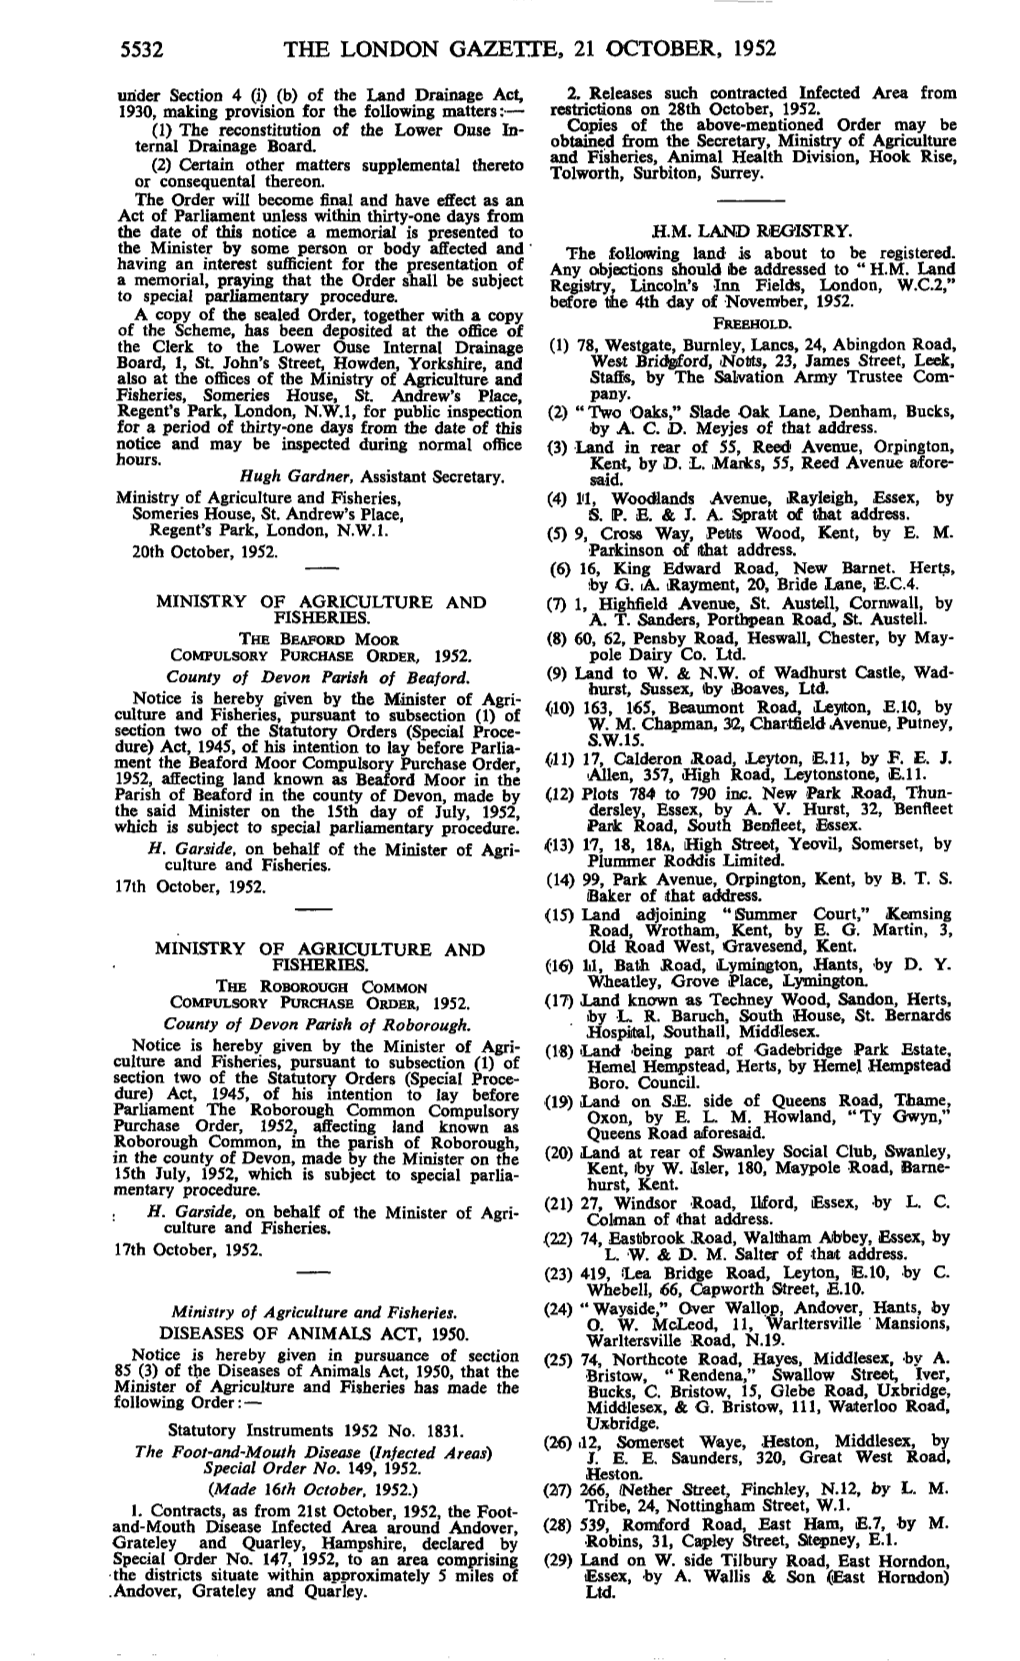 5532 the London Gazette, 21 October, 1952